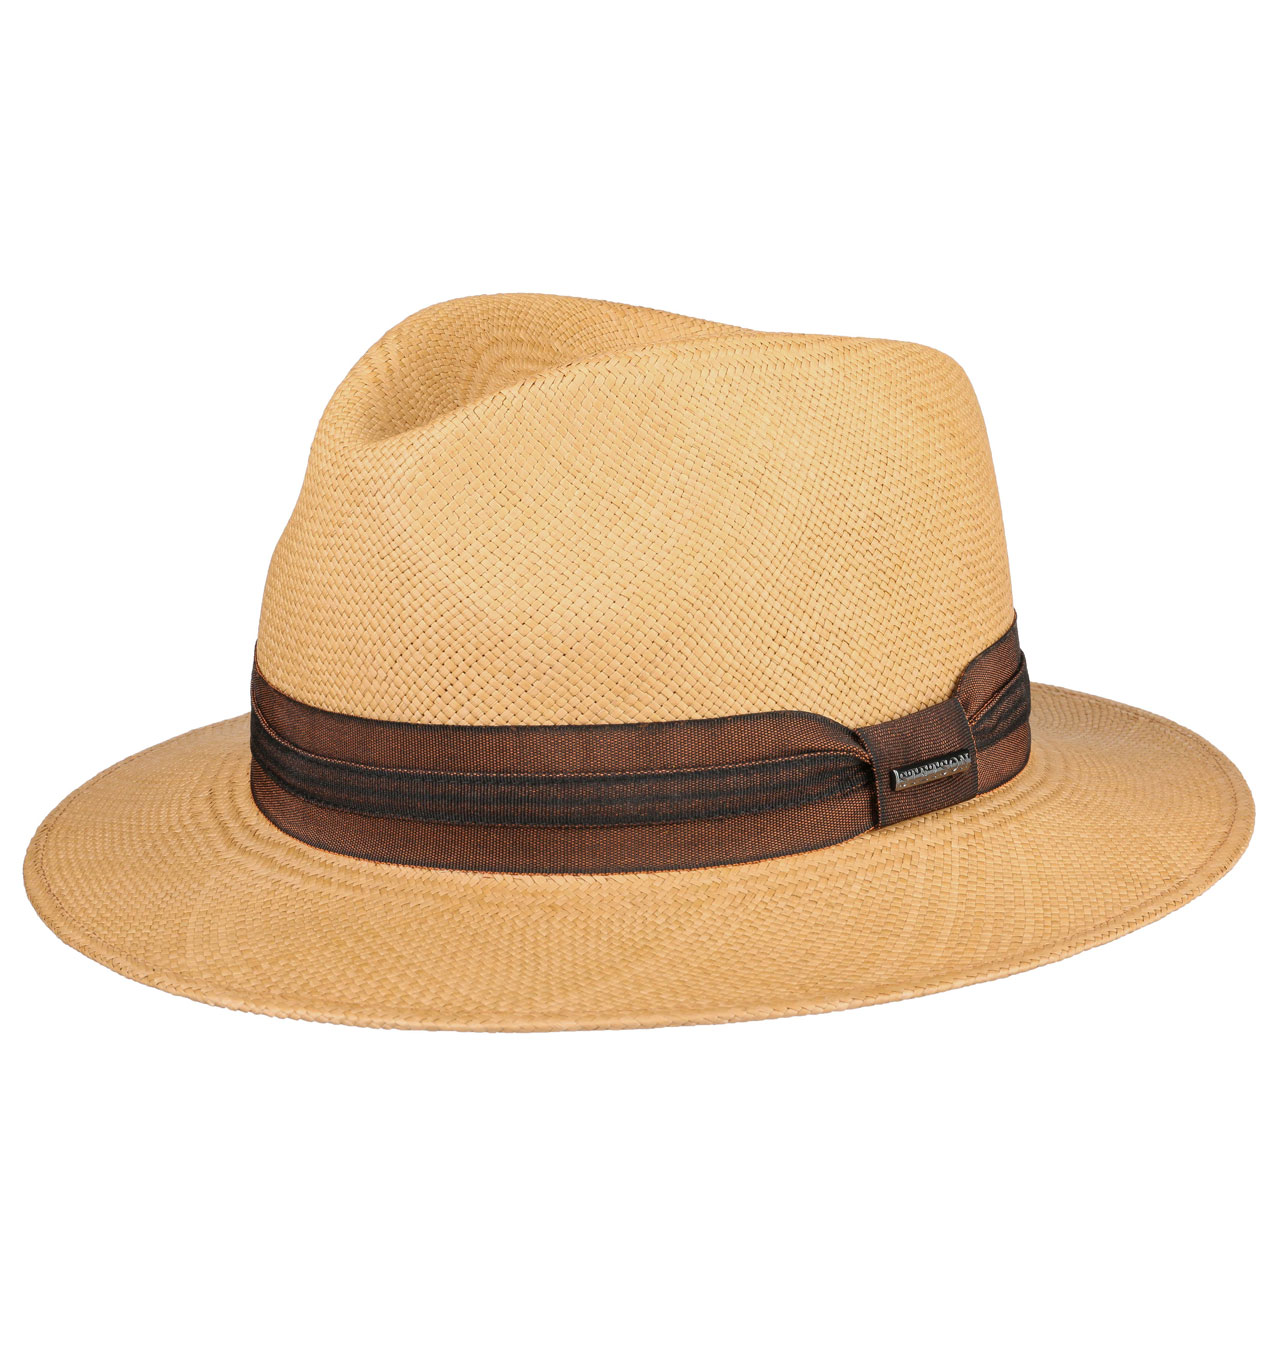 Stetson - Kamarro Panama Hat - Light Brown 